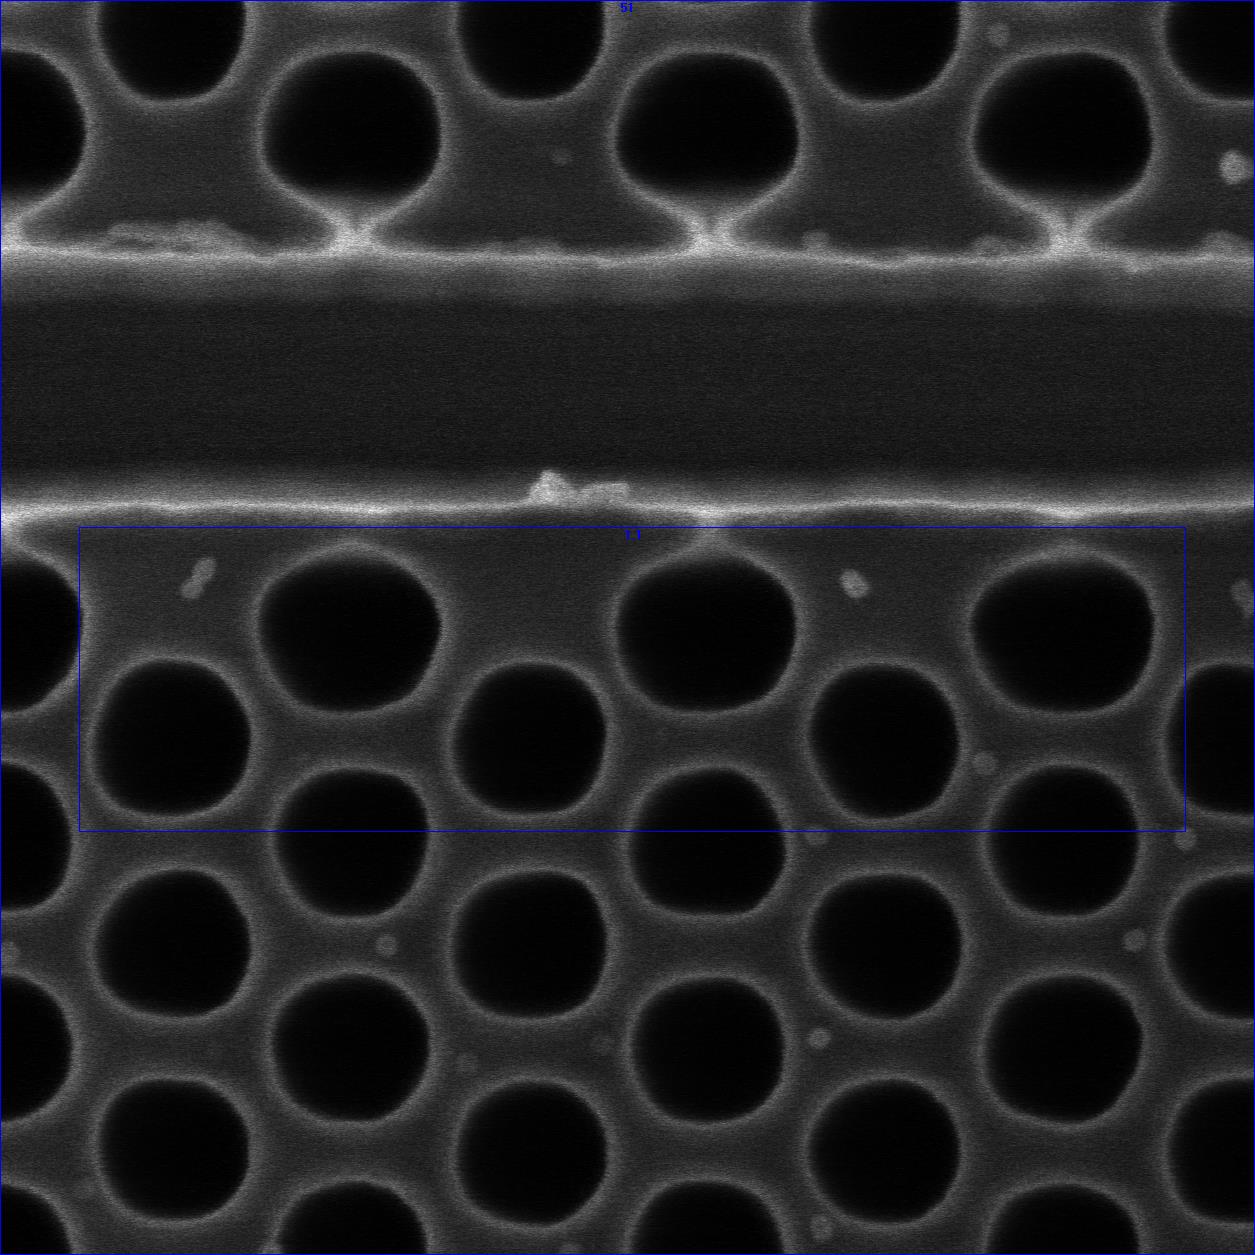 AMAG7 HARhole, 1.5 µm depth, SiO2 on Si, C60P120 anchor target